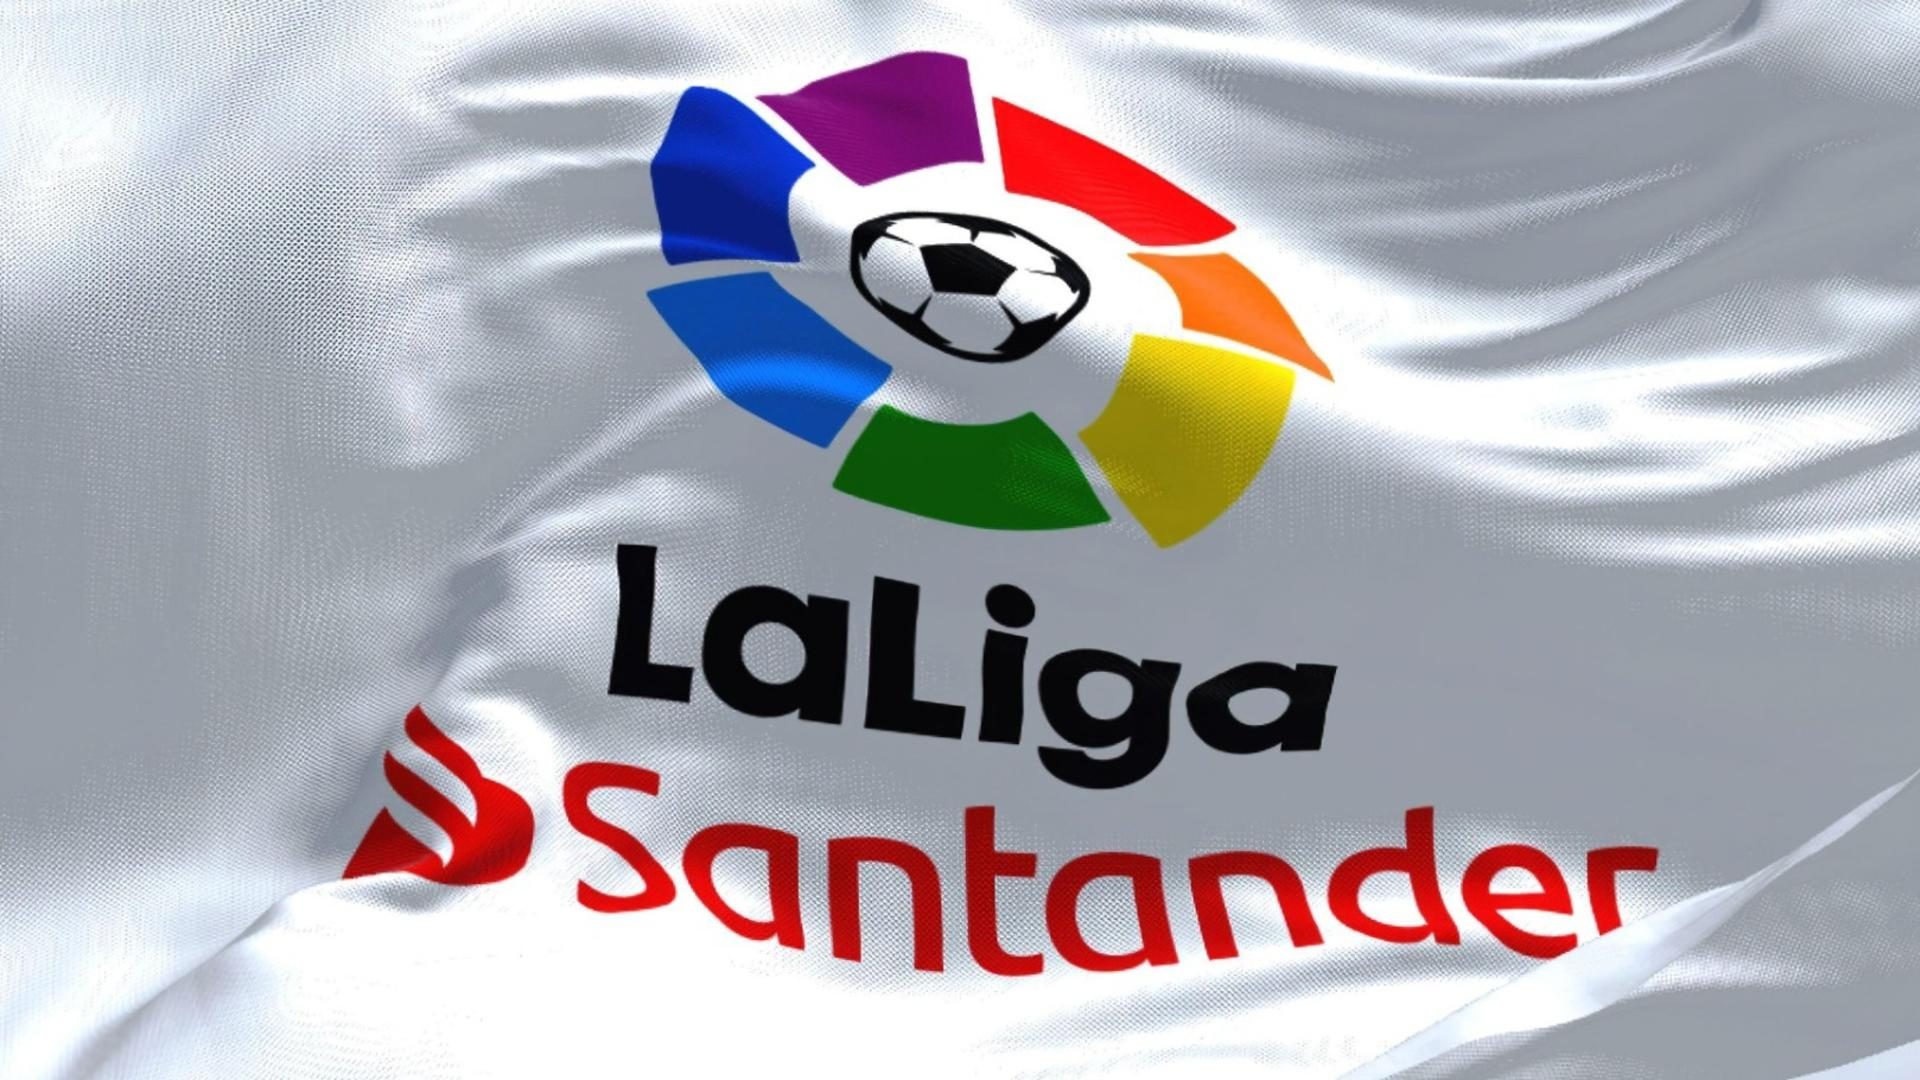 La Liga transfer market: How it works - rules fully explained